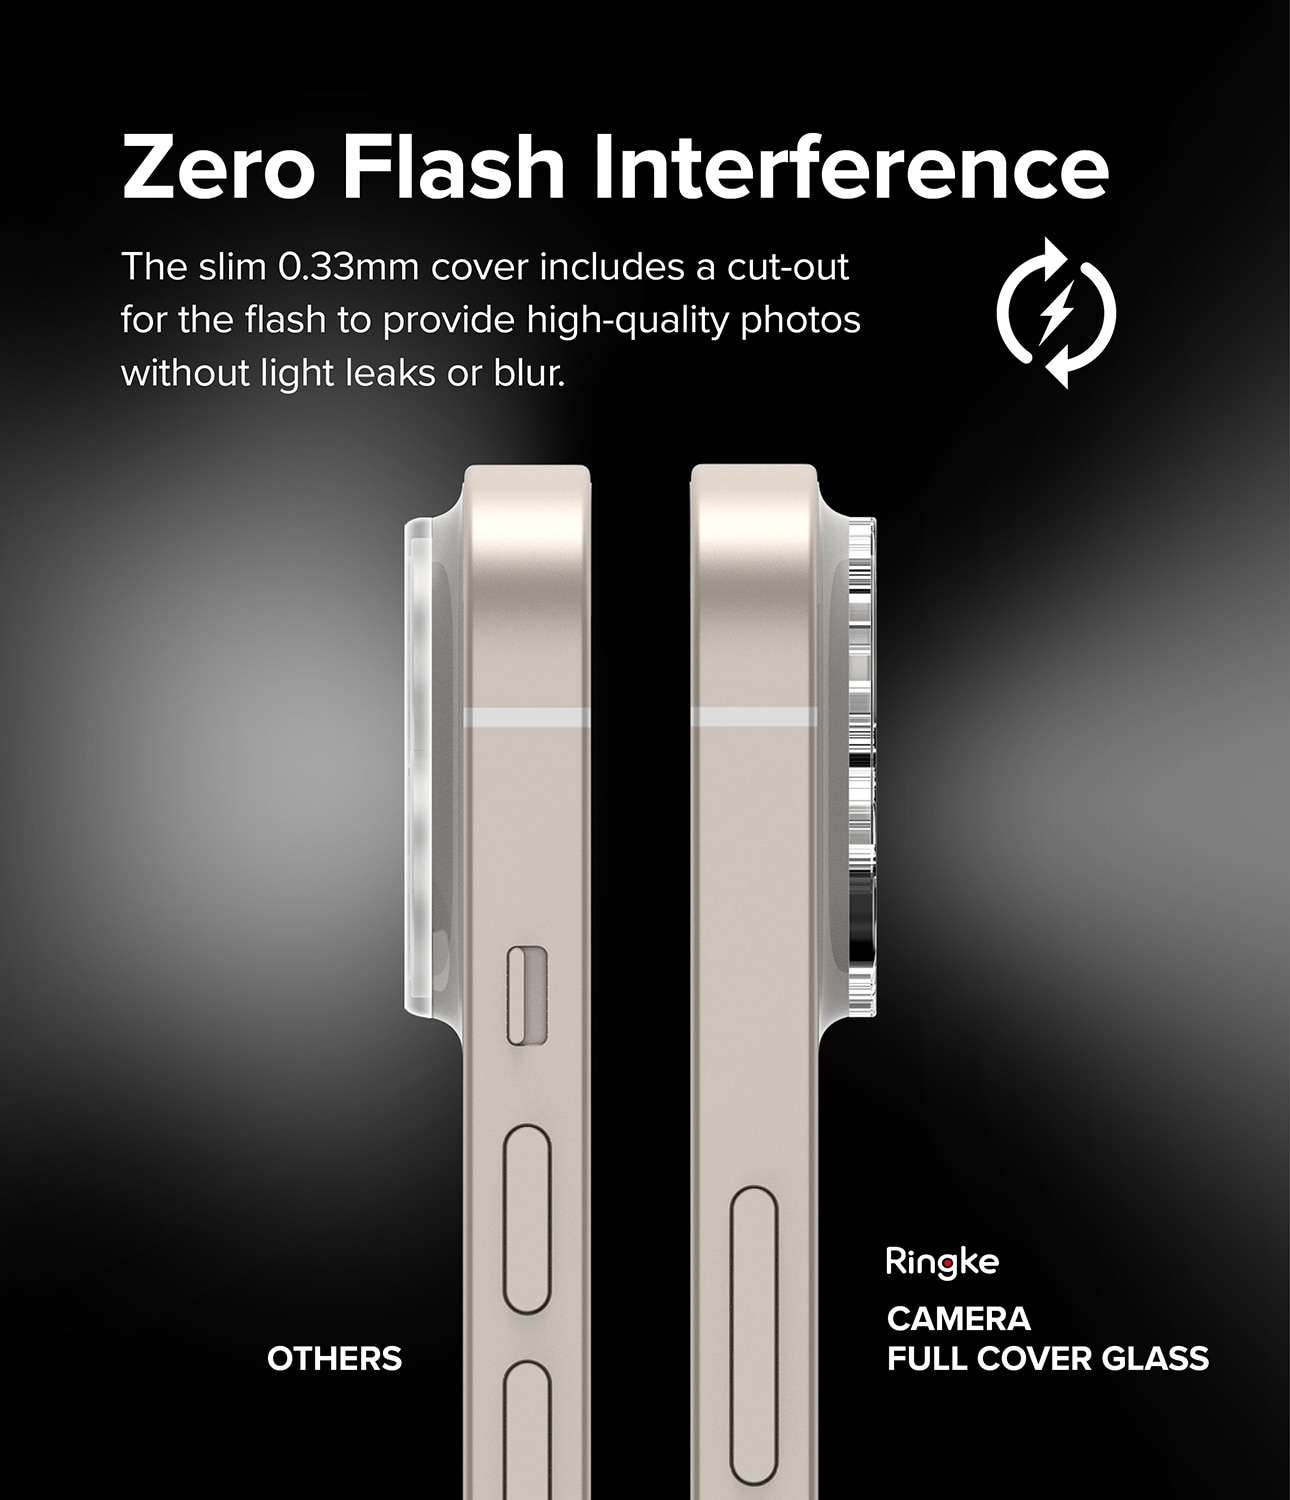 Camera Protector Glass (2 piezas) iPhone 14 Plus Transparente